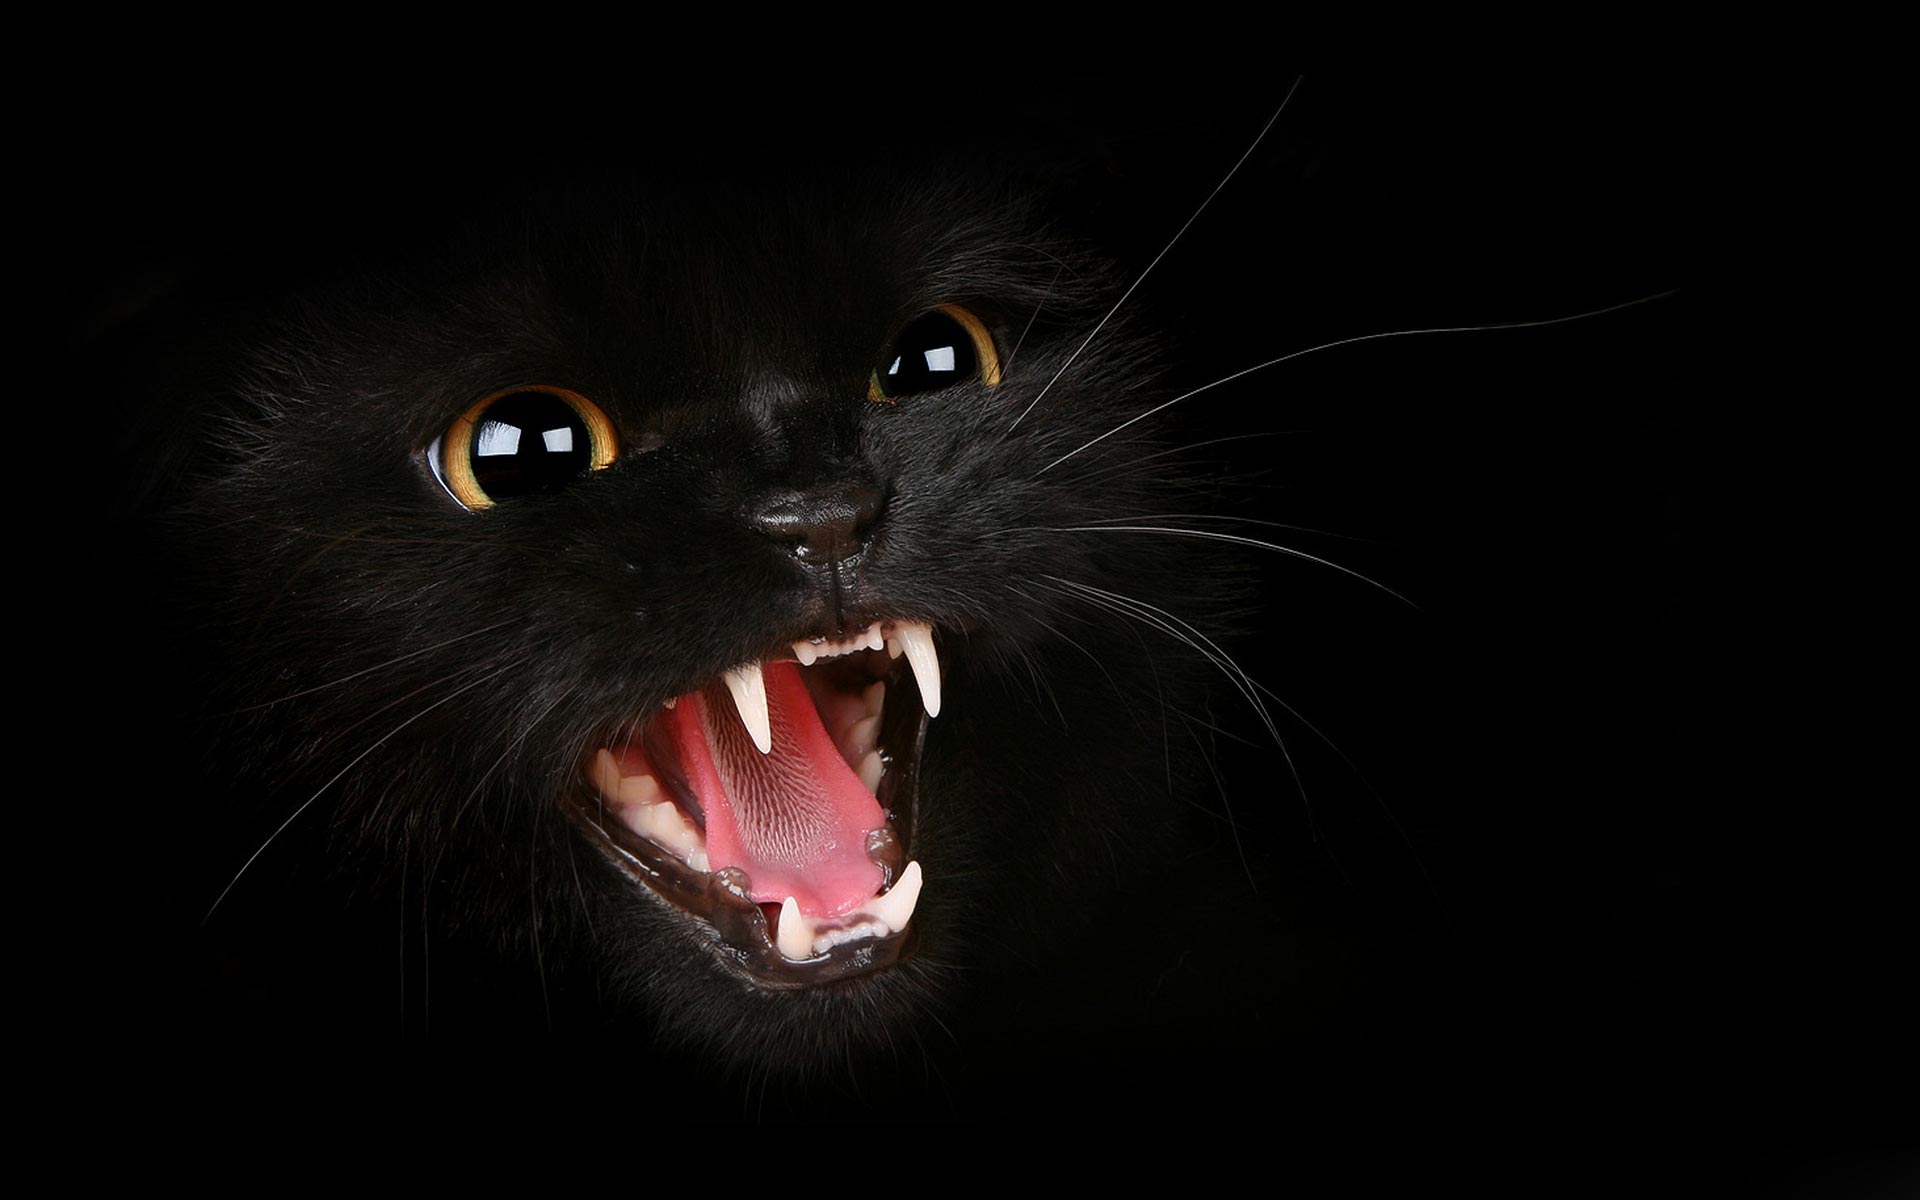 rPrF4N Aggressive black cat